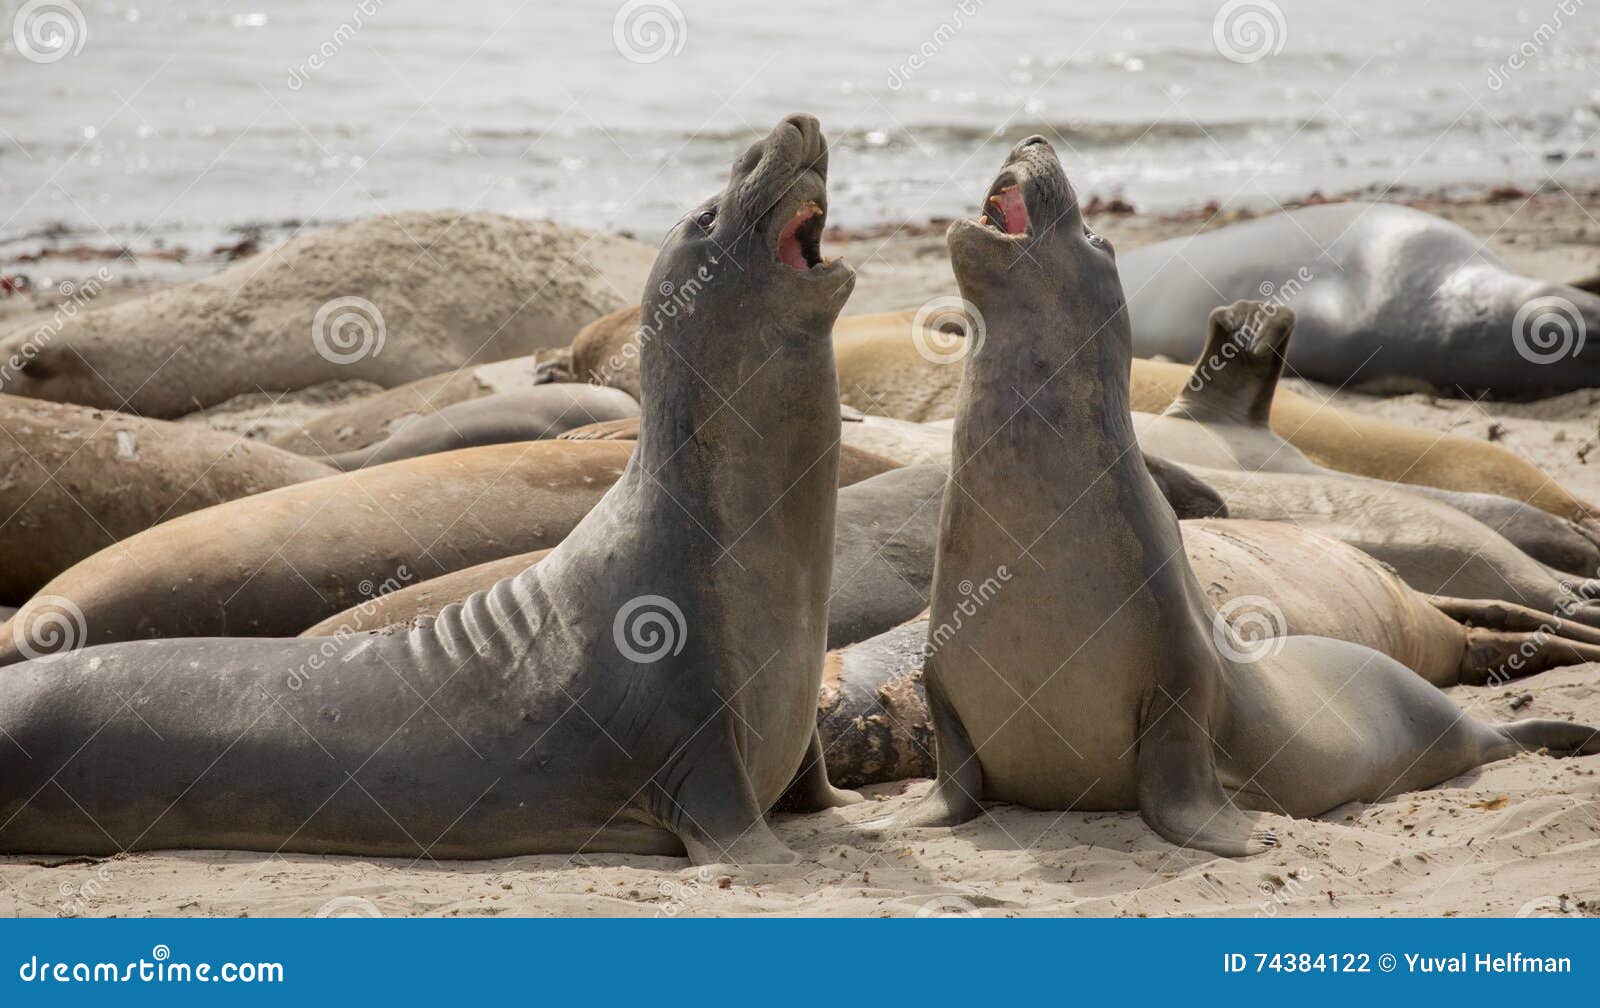 northern elephant seals - mirounga angustirostris, adult males, aÃÂ±o nuevo state park, california